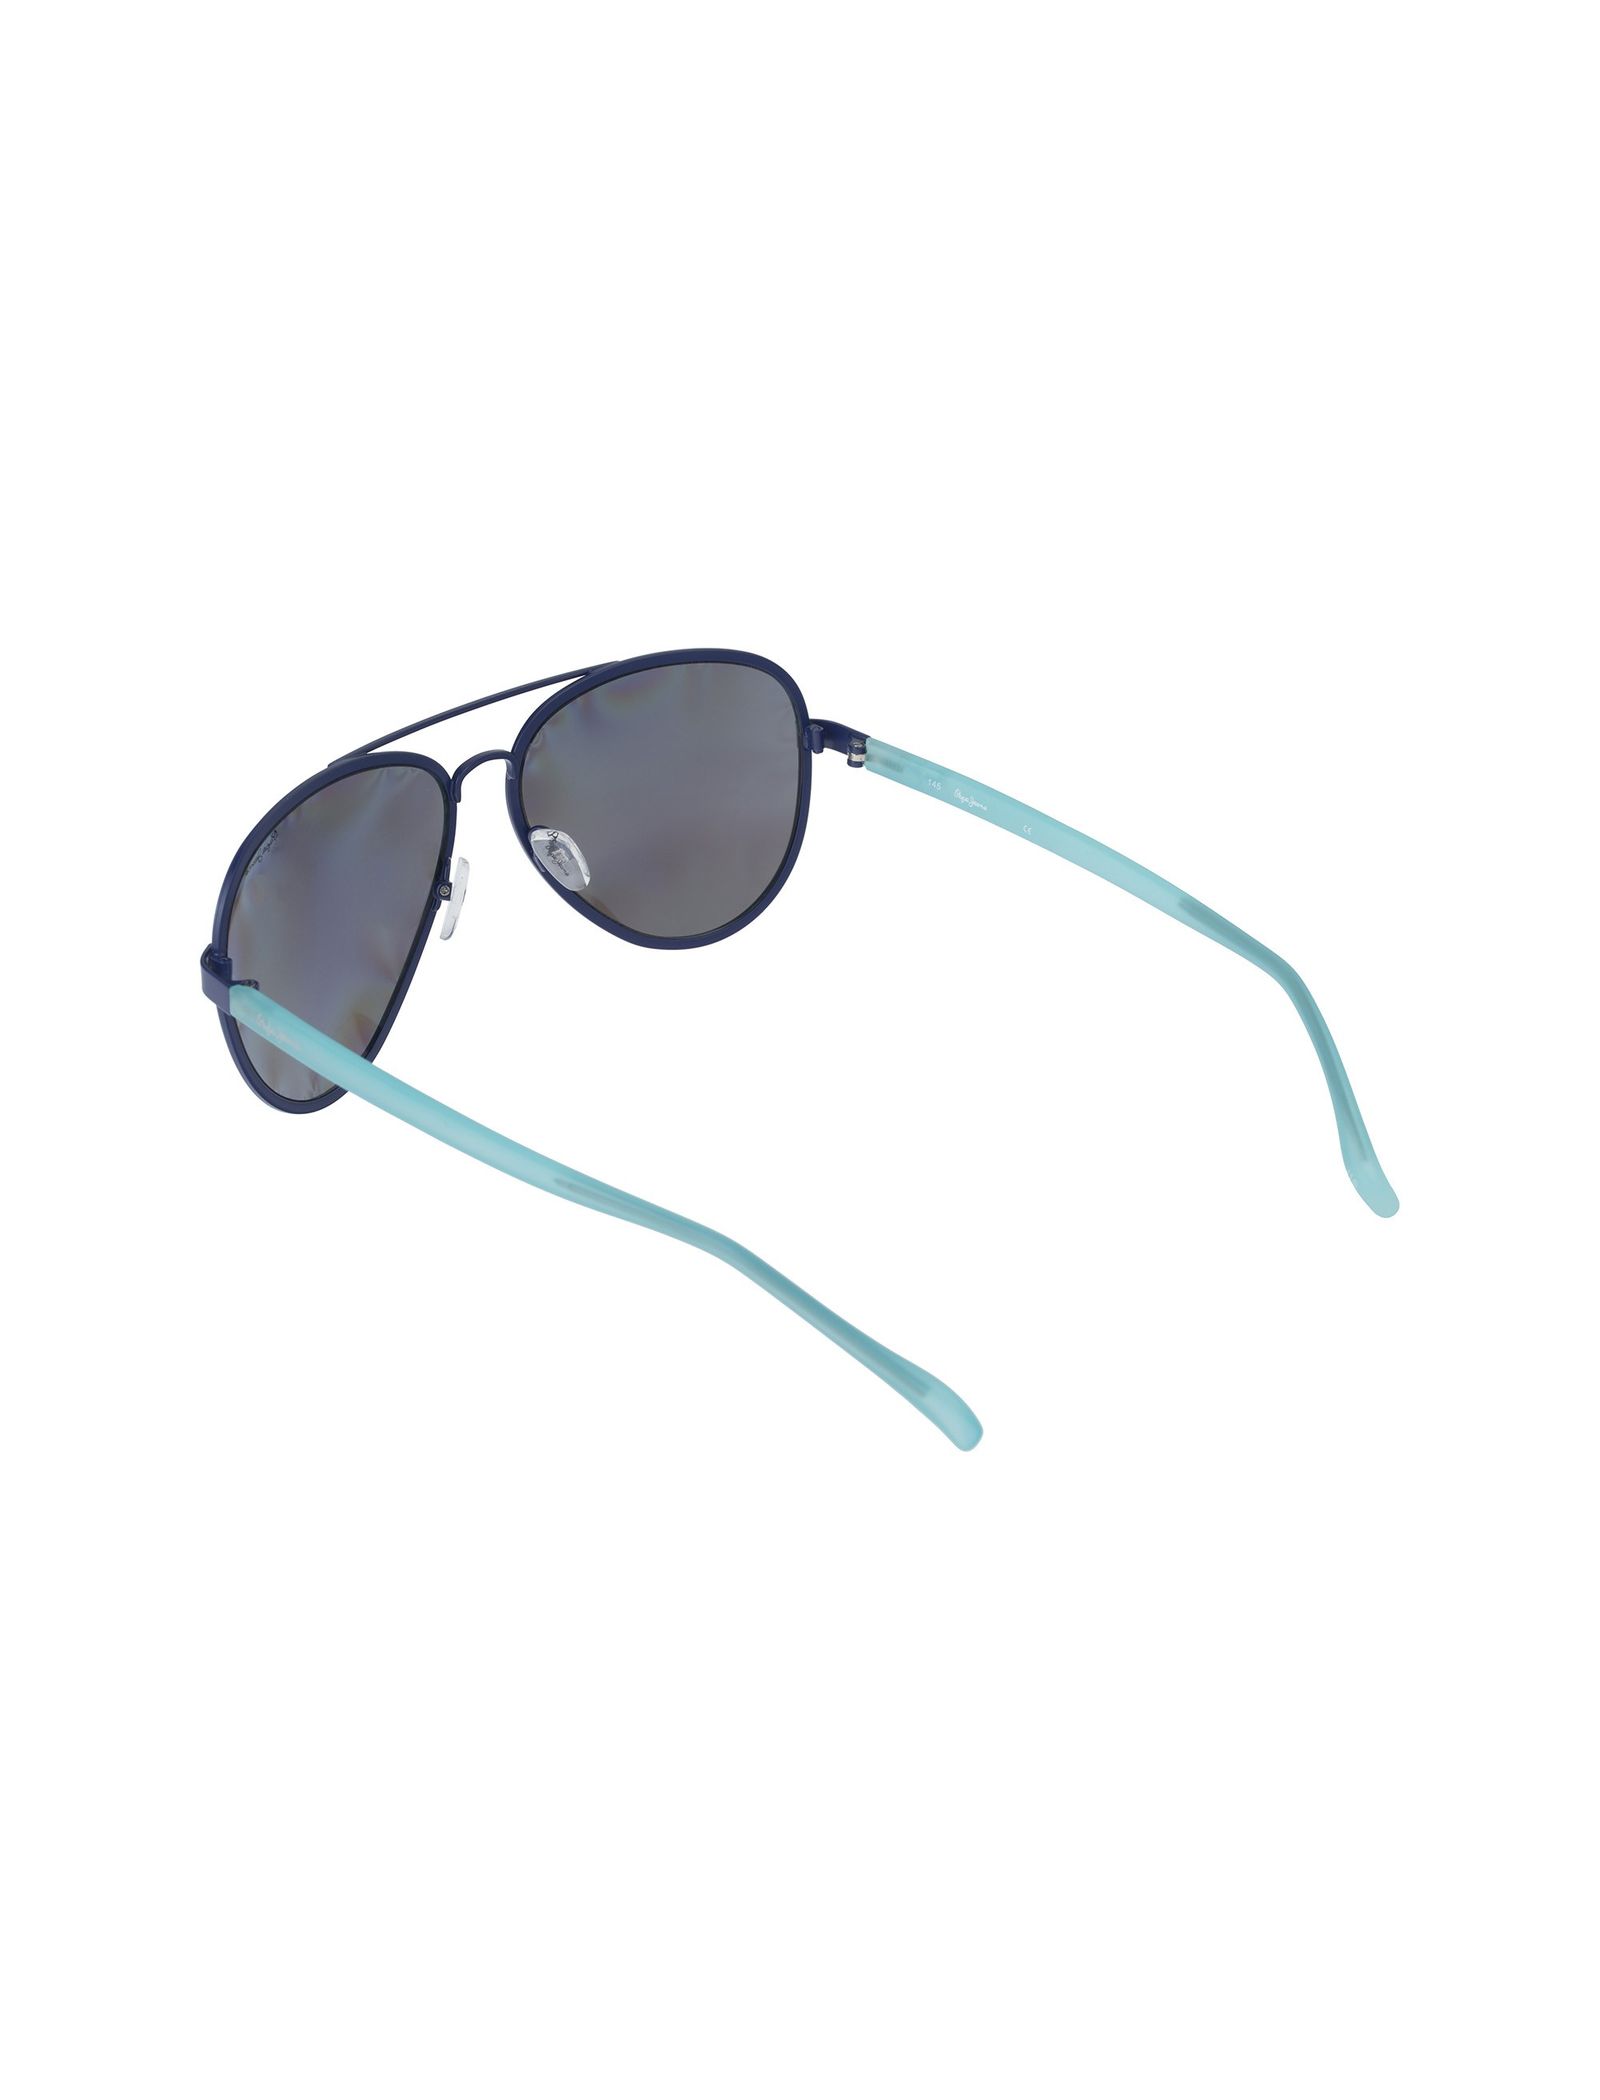 عینک آفتابی خلبانی زنانه - پپه جینز - آبي روشن - 5